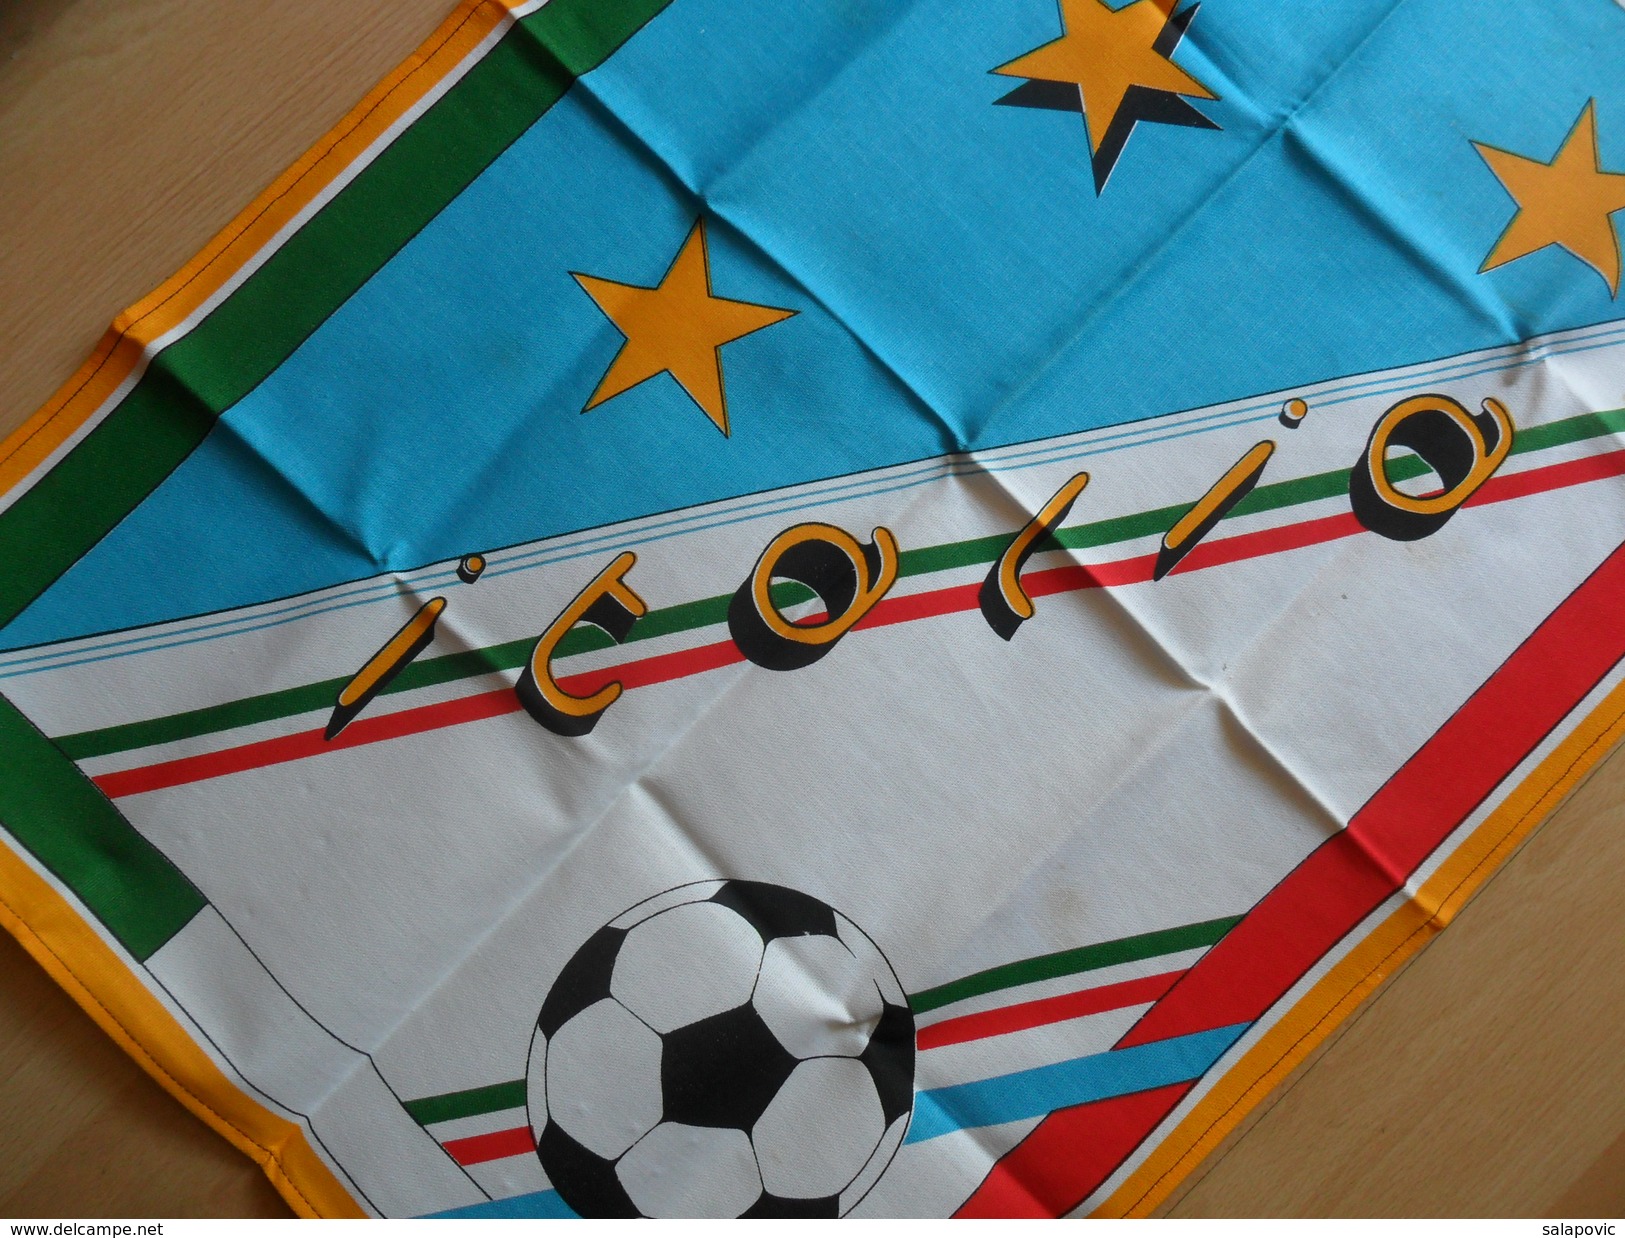 ITALY, ITALIAN FOOTBALL FEDERATION  FOOTBALL CLUB, CALCIO FLAG SUVENIR - Bekleidung, Souvenirs Und Sonstige